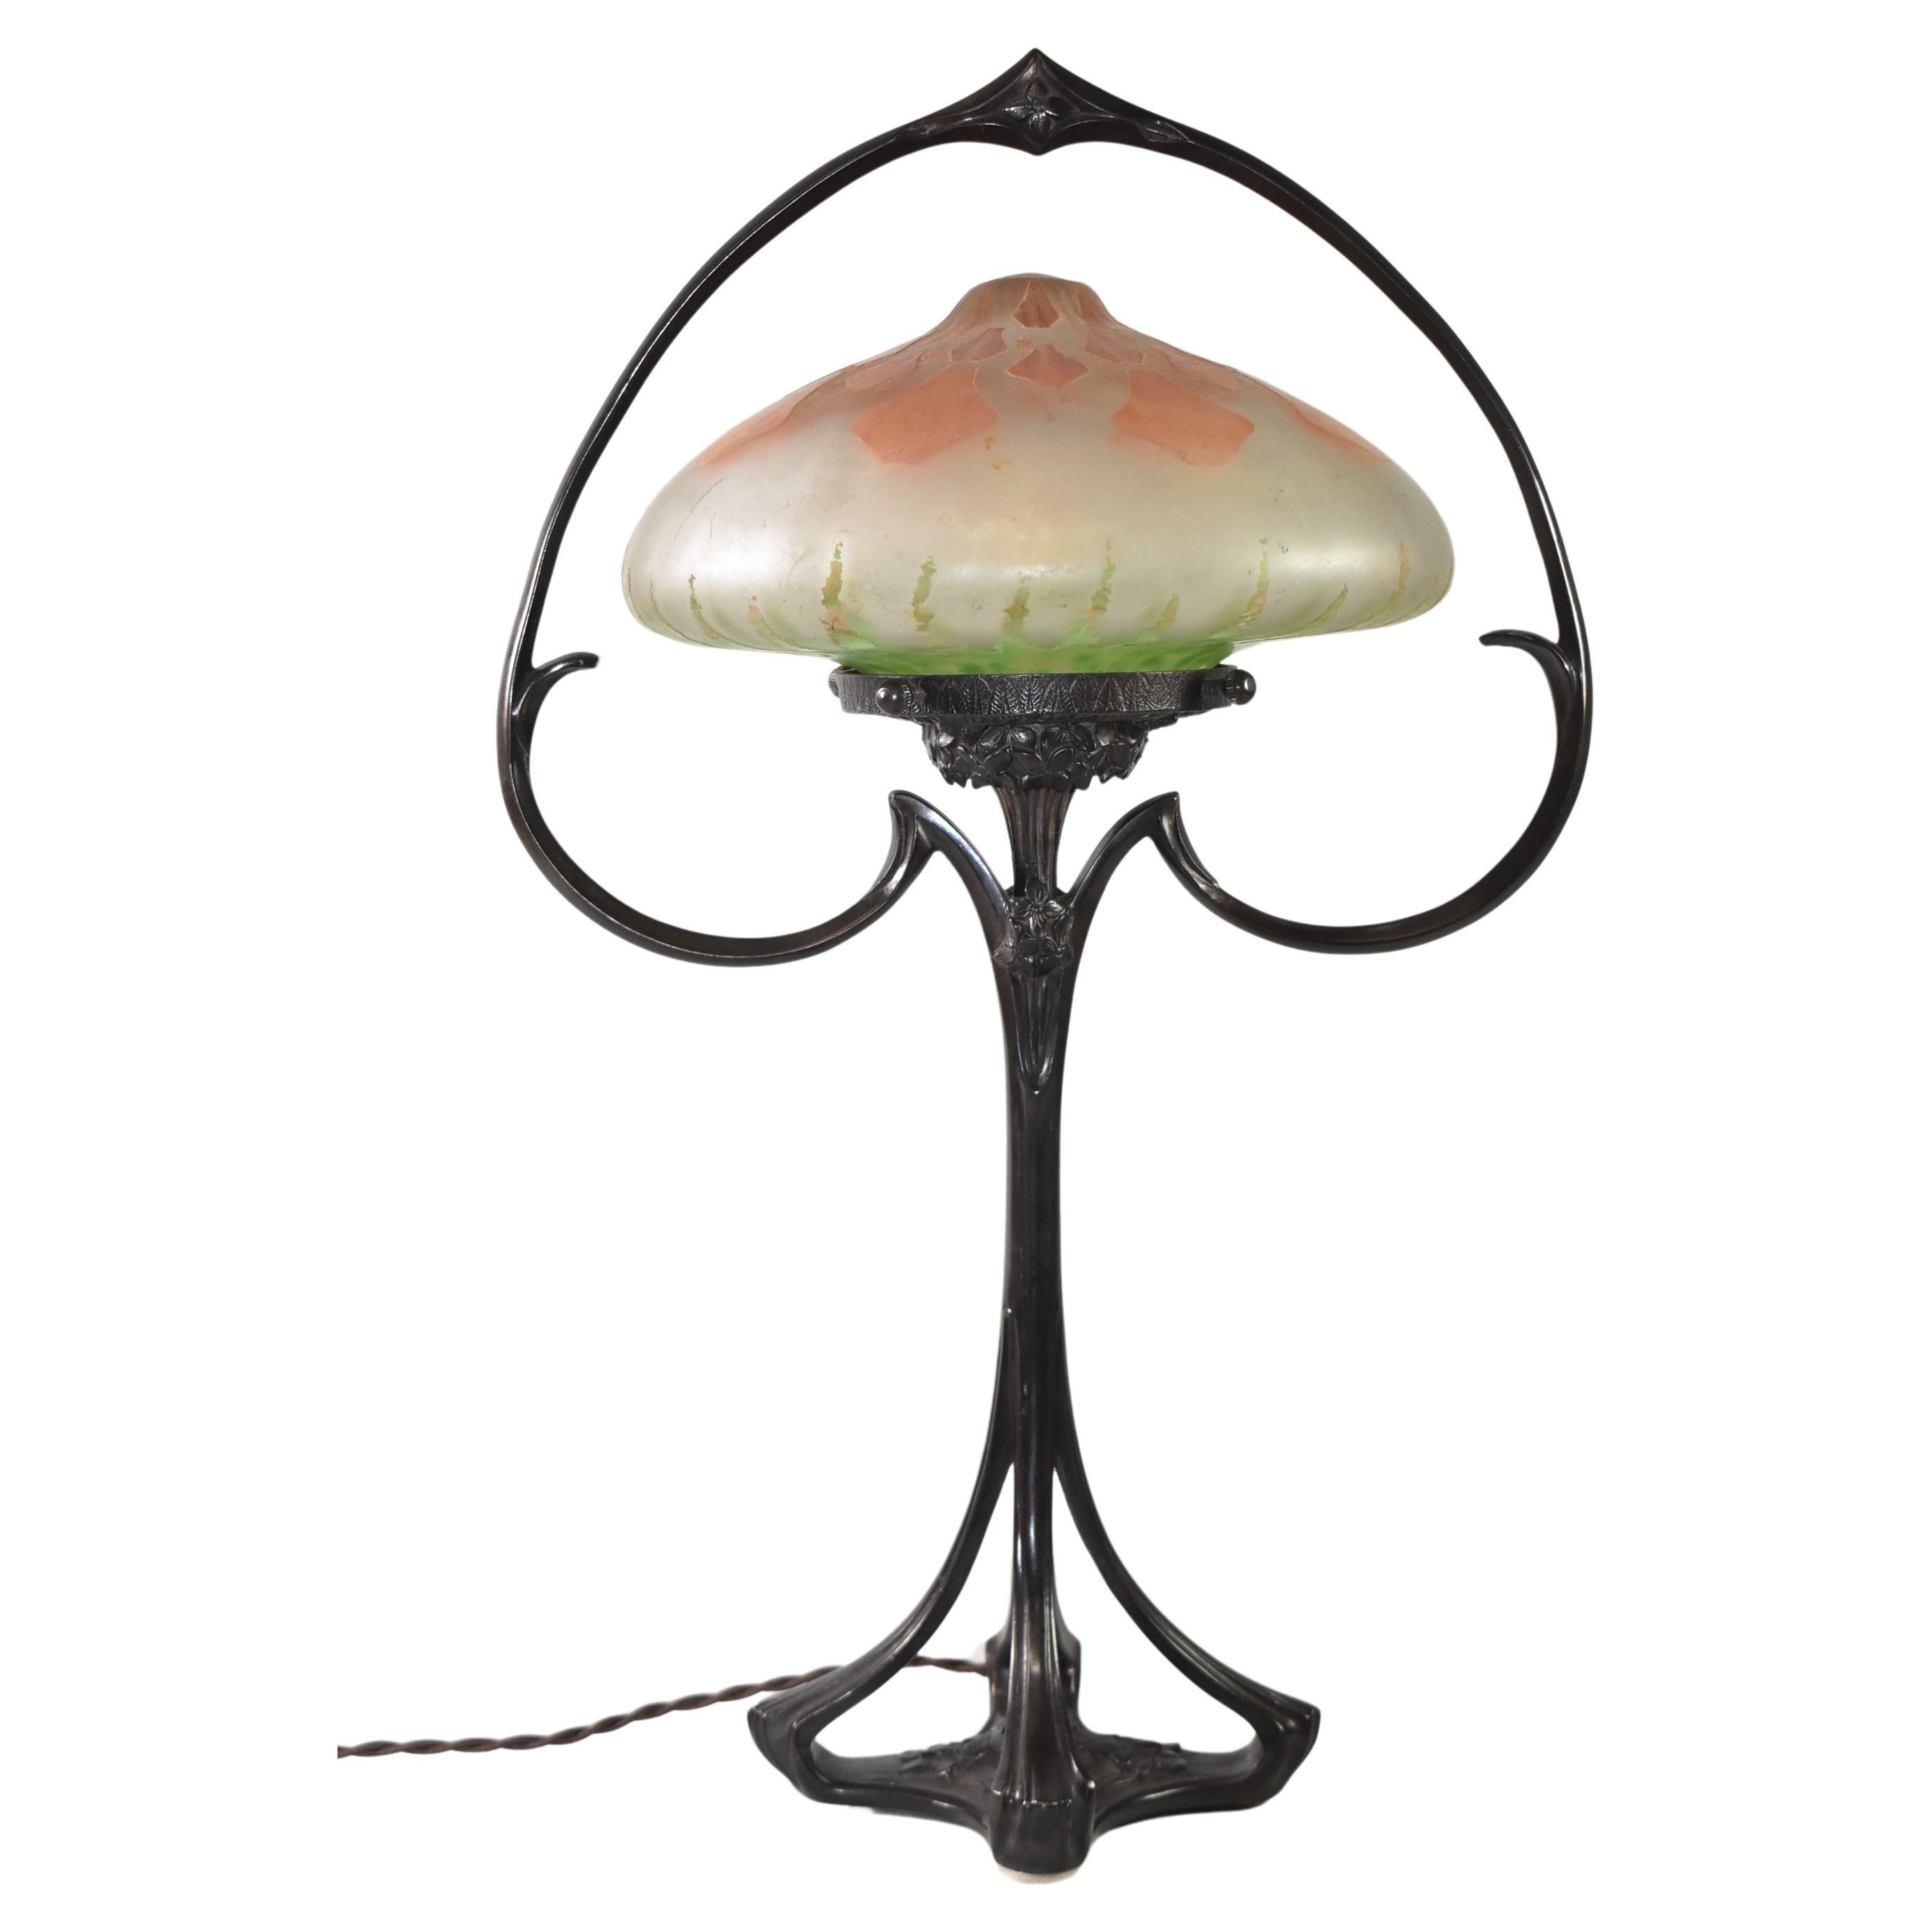 Art Nouveau Table Lamp with Daum Nancy Shade, Circa 1900 France For Sale